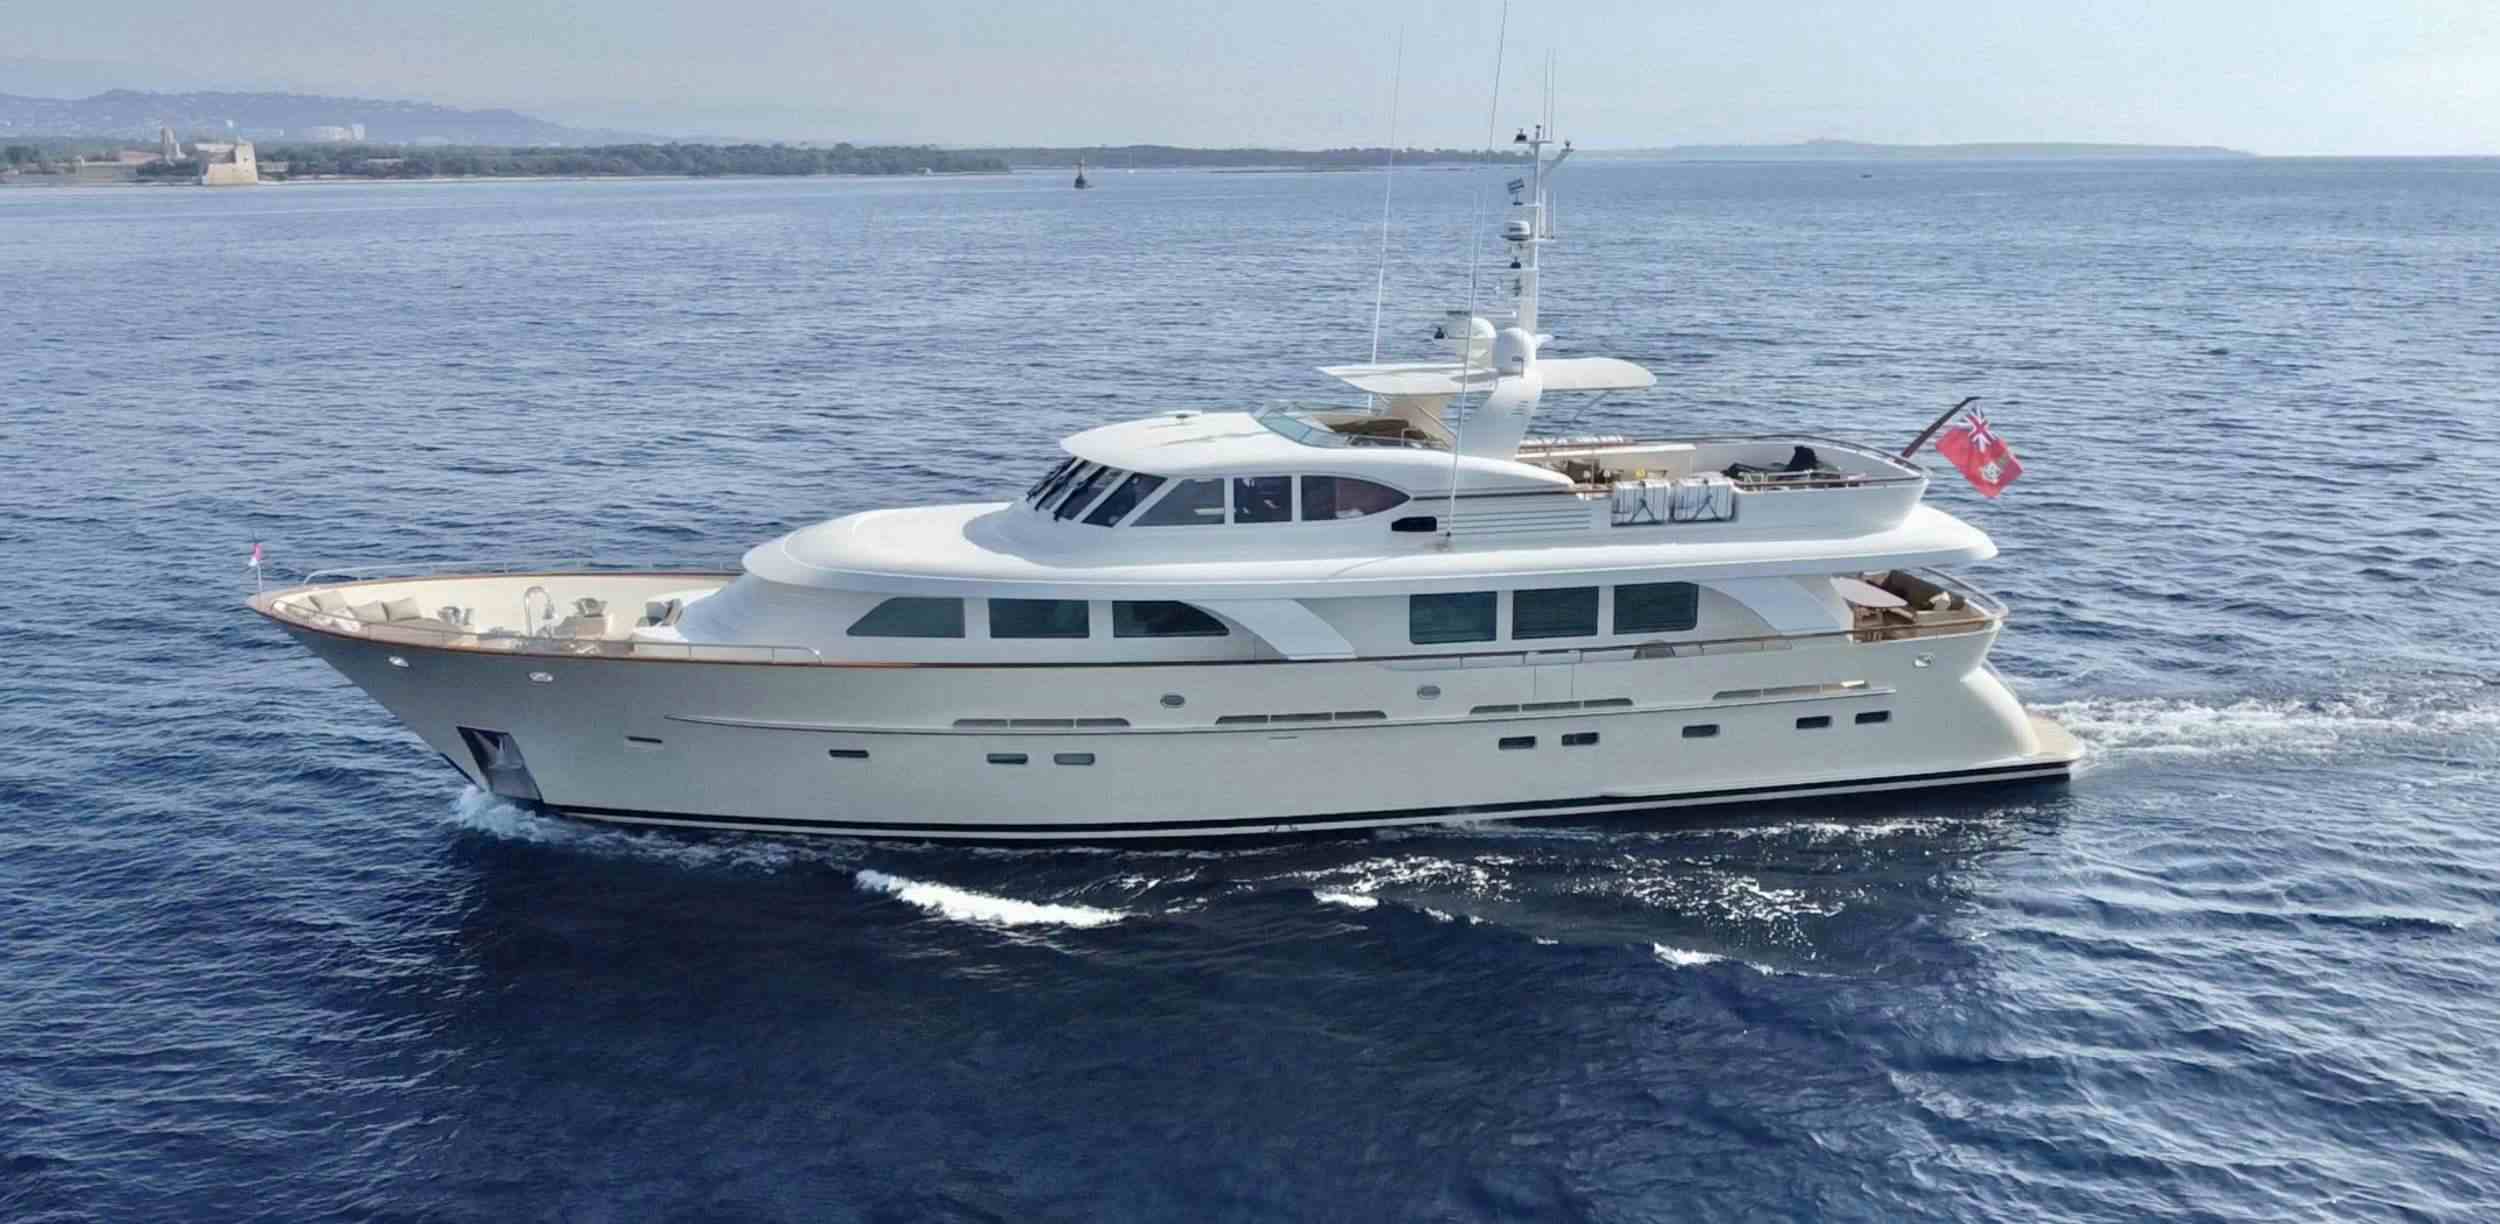 ORIZZONTE - Yacht Charter San Sebastian de la Gomera & Boat hire in W. Med -Naples/Sicily, W. Med -Riviera/Cors/Sard., W. Med - Spain/Balearics 1